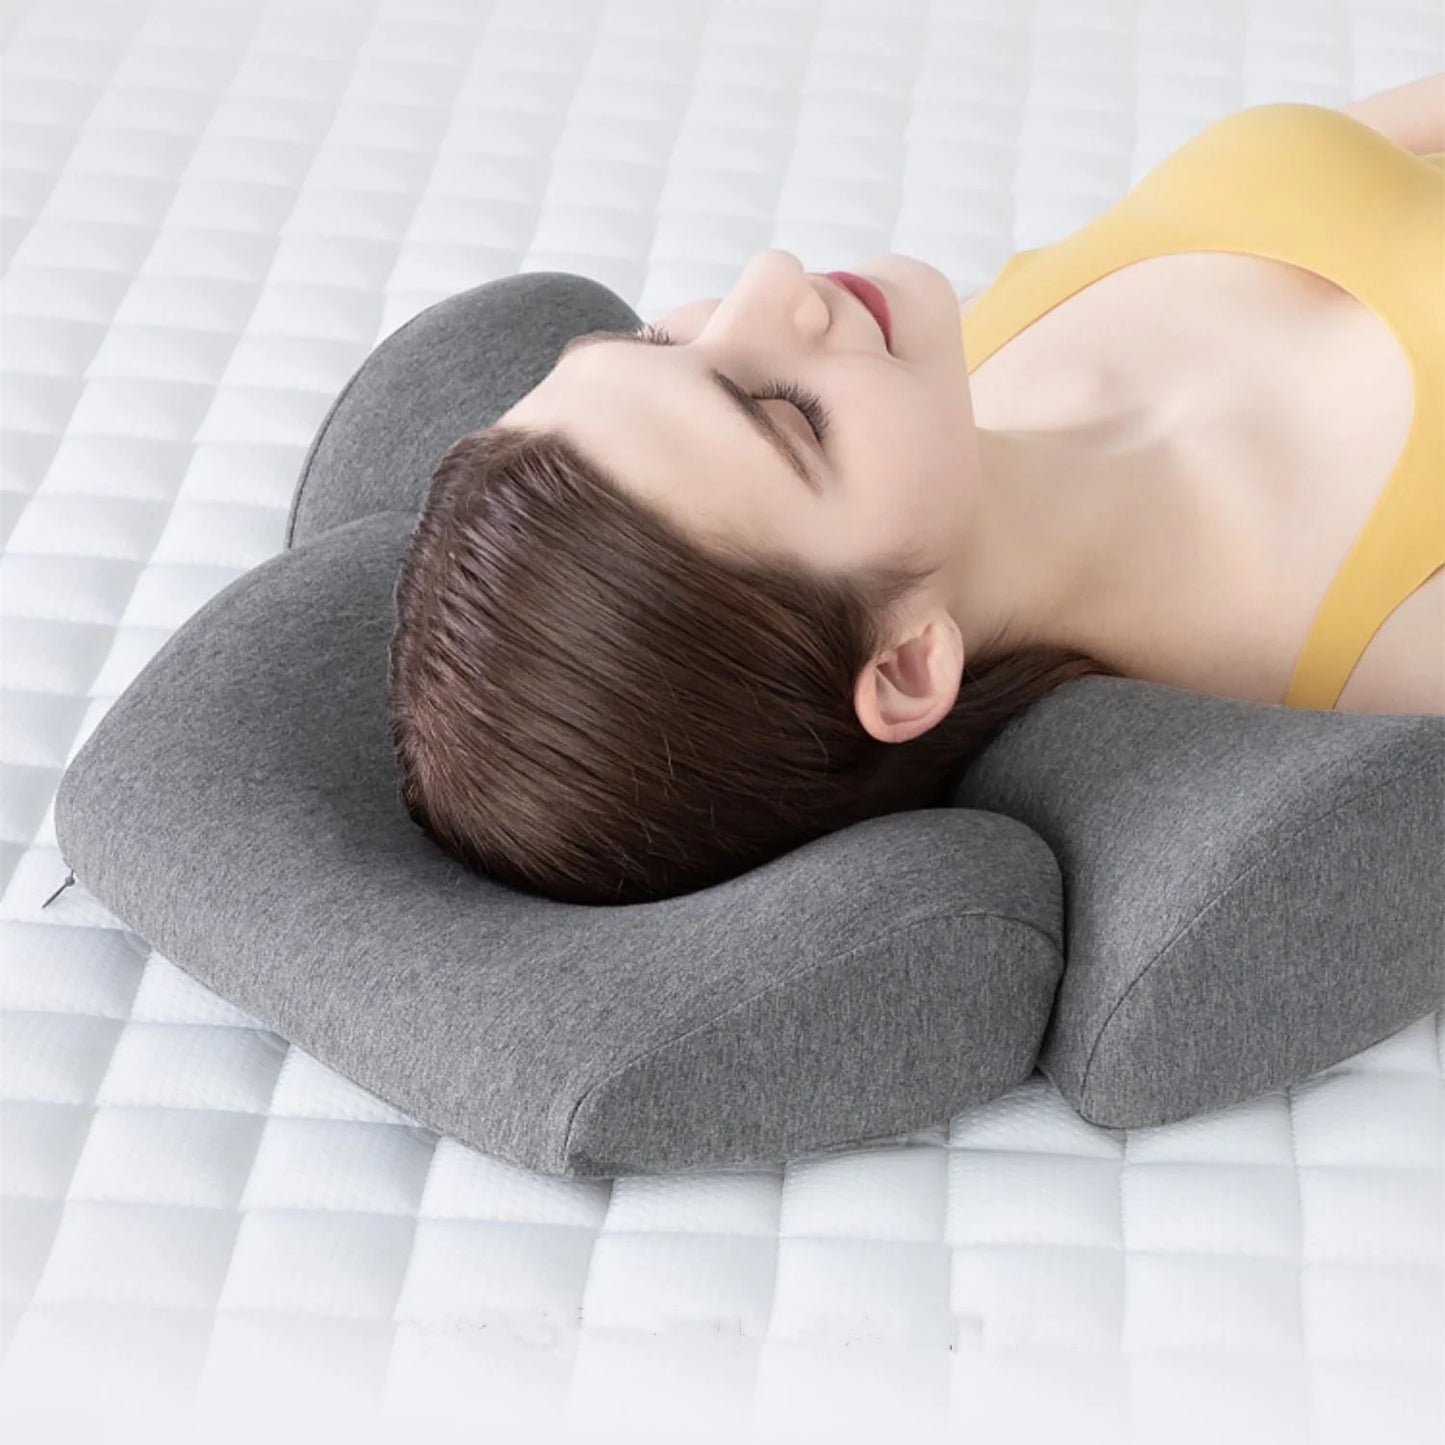 Cervical Pillow for Neck Pain